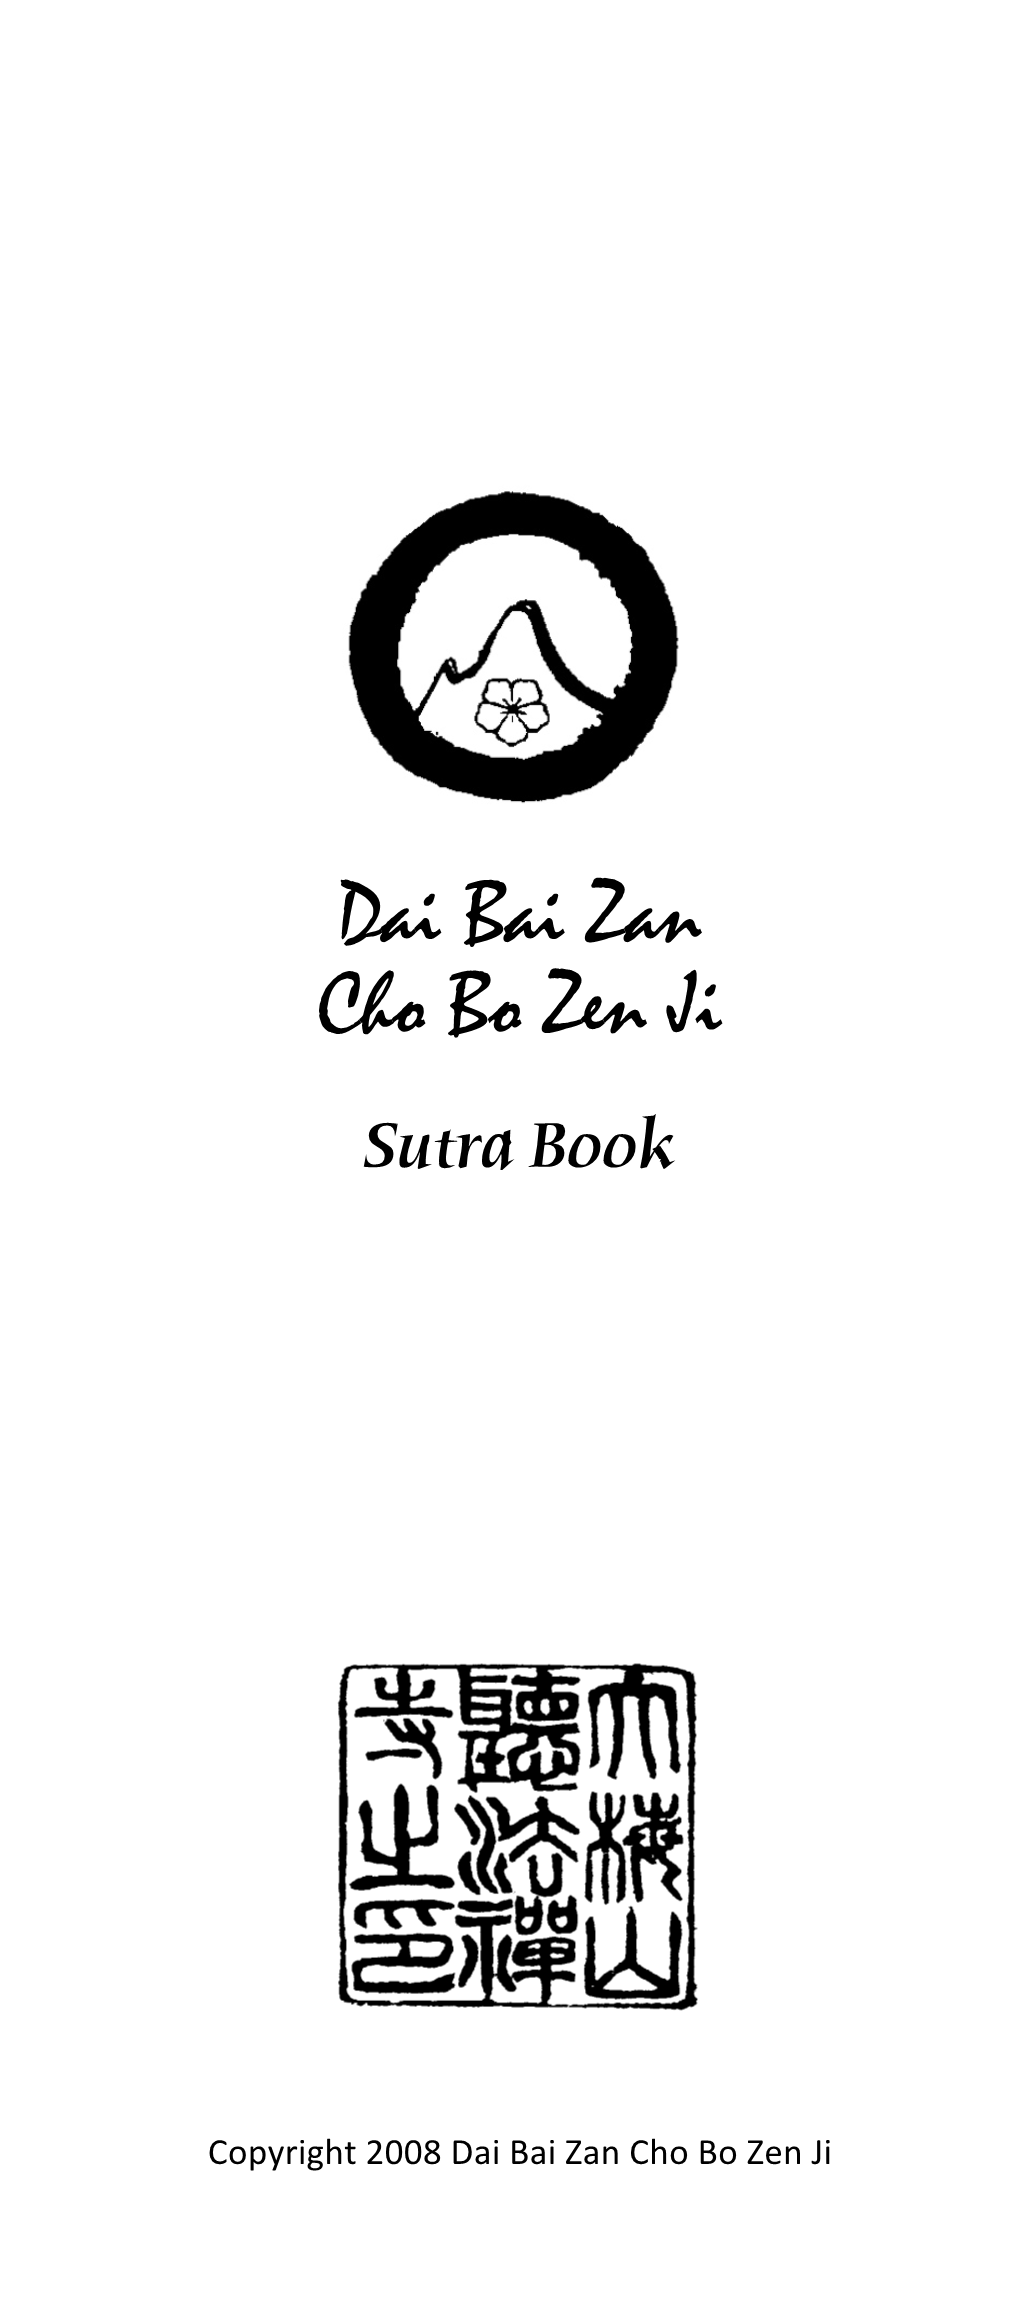 Dai Bai Zan Cho Bo Zen Ji